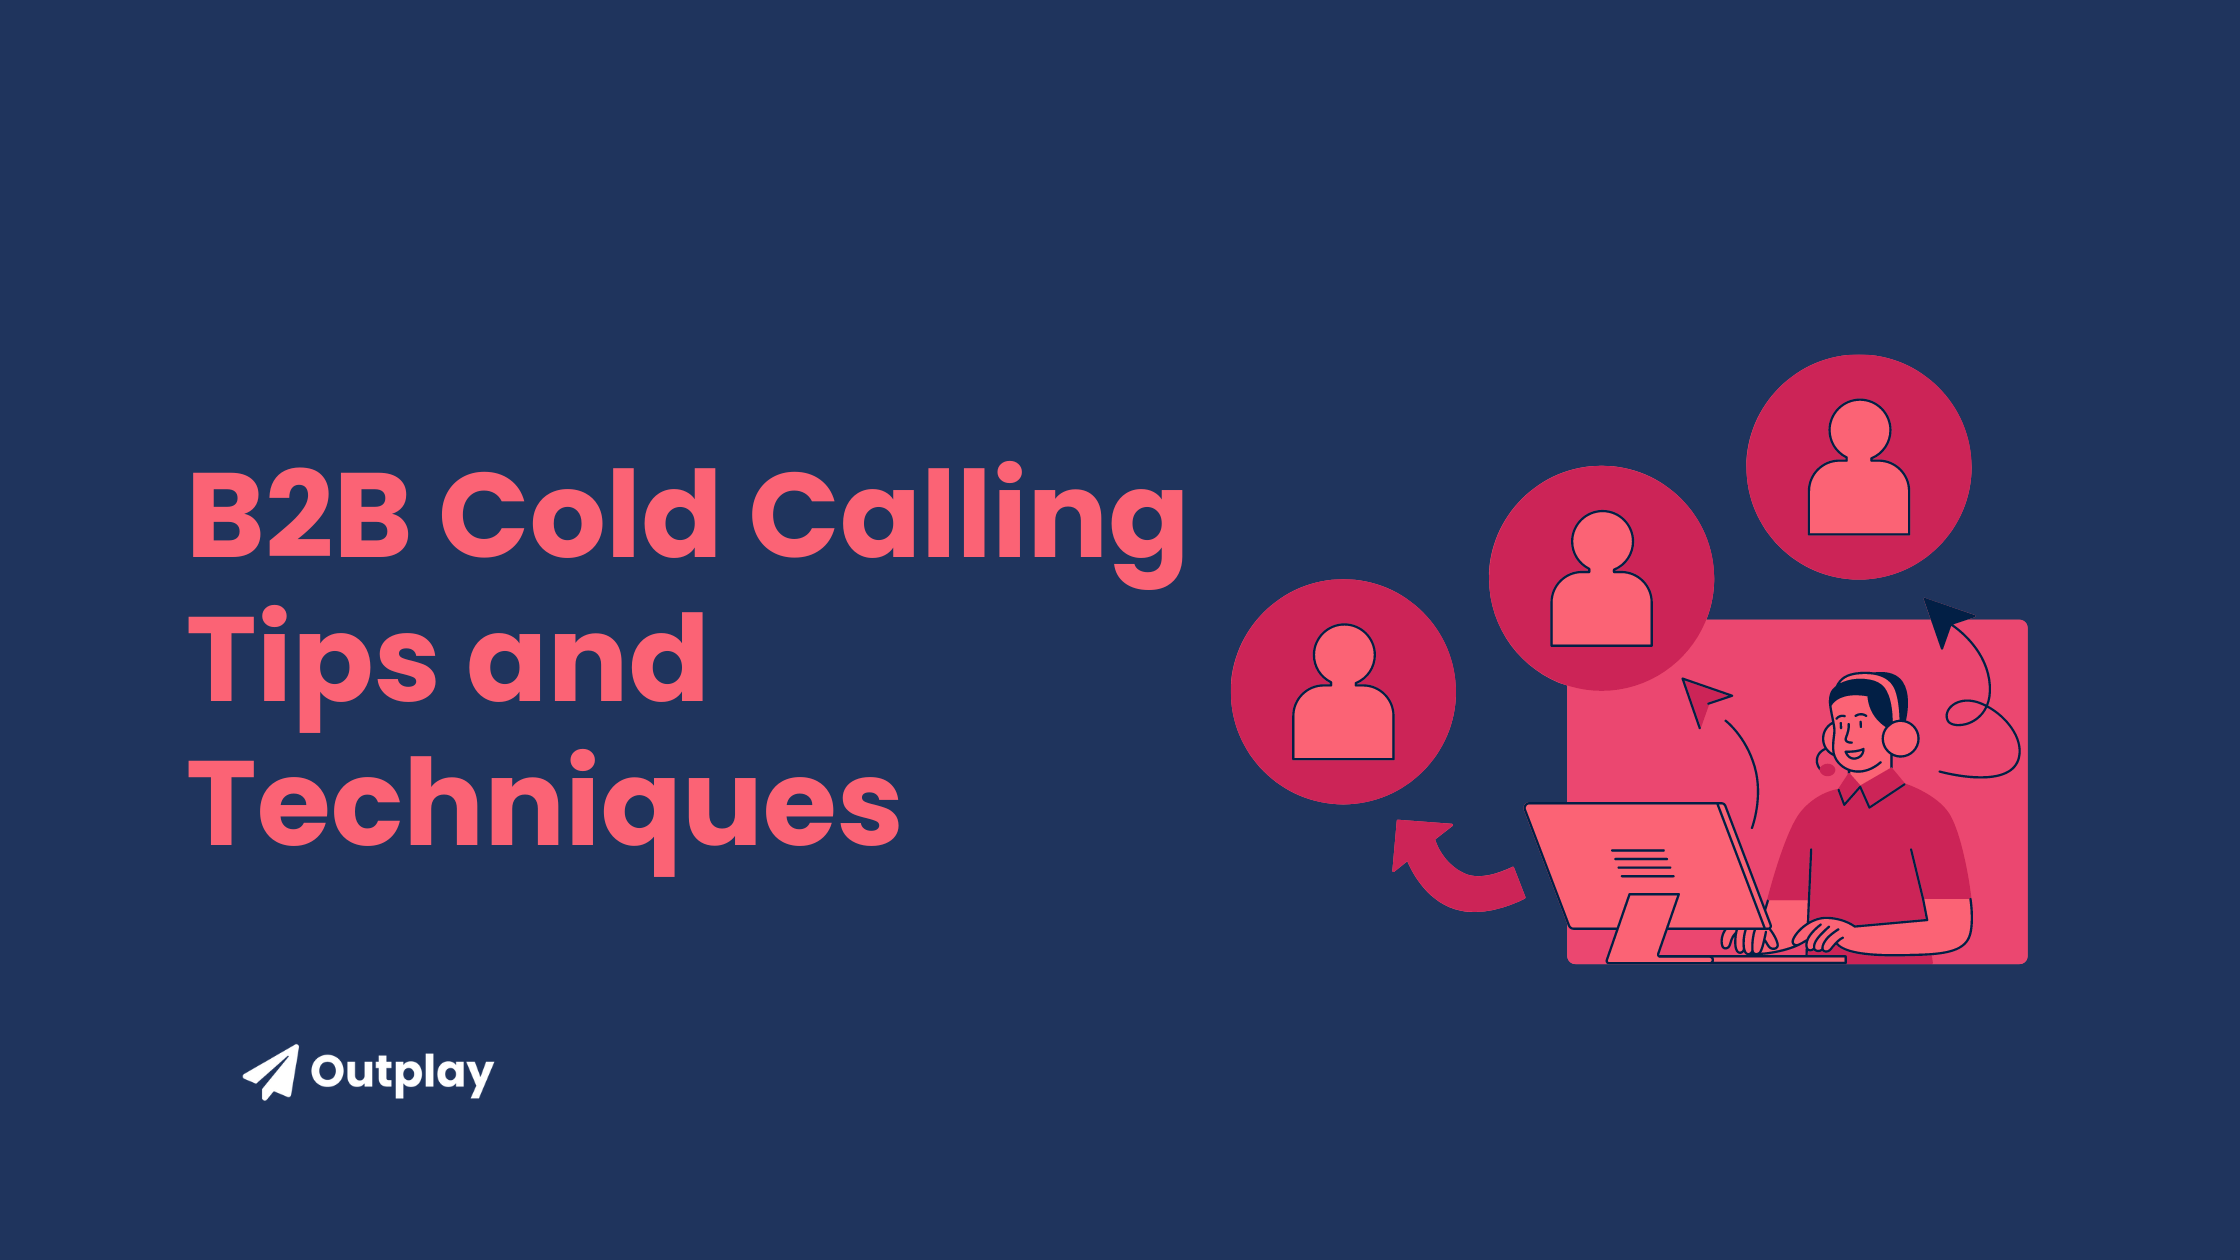 B2B Cold Calling